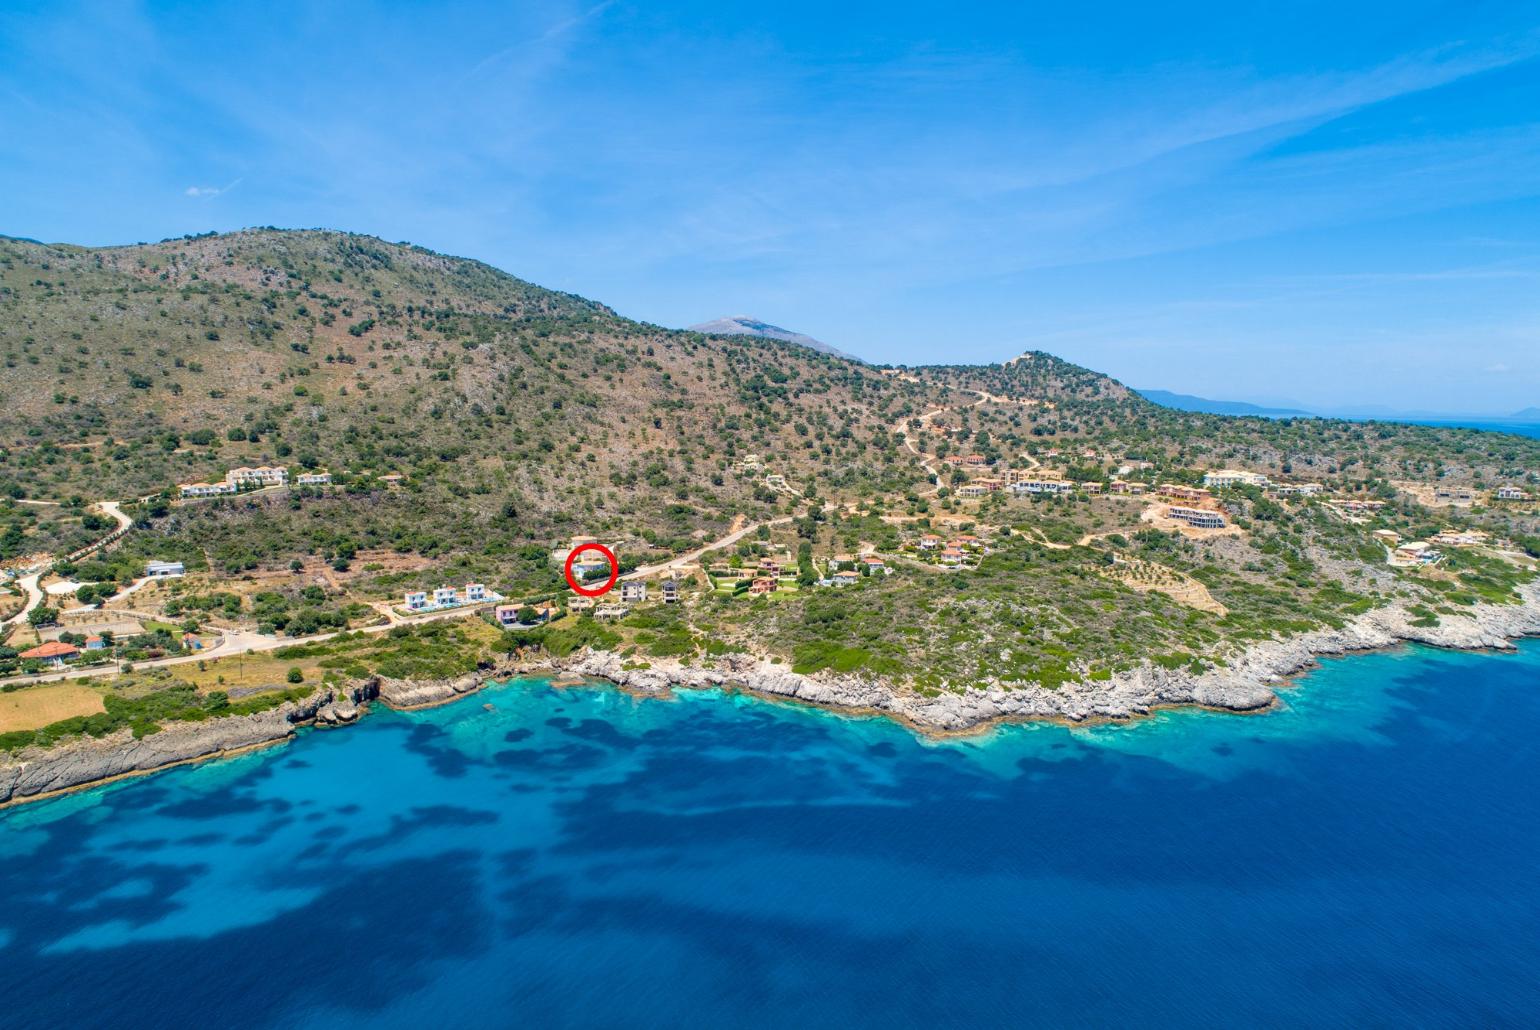 Aerial view showing location of Skala Villa Blue